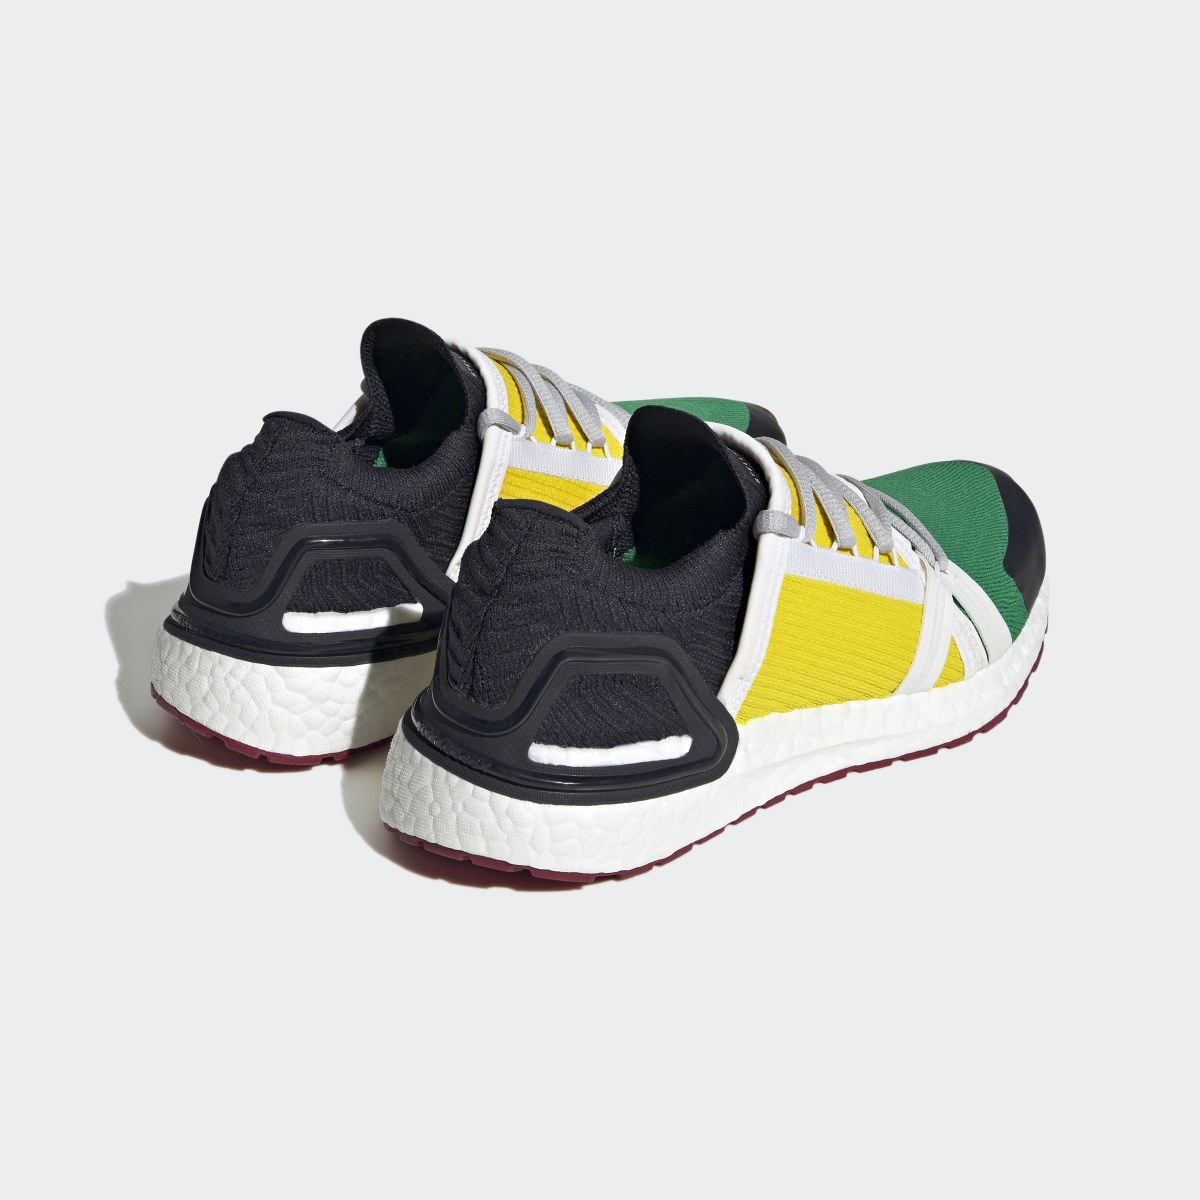 Adidas by Stella McCartney Ultraboost 20 Shoes. 6